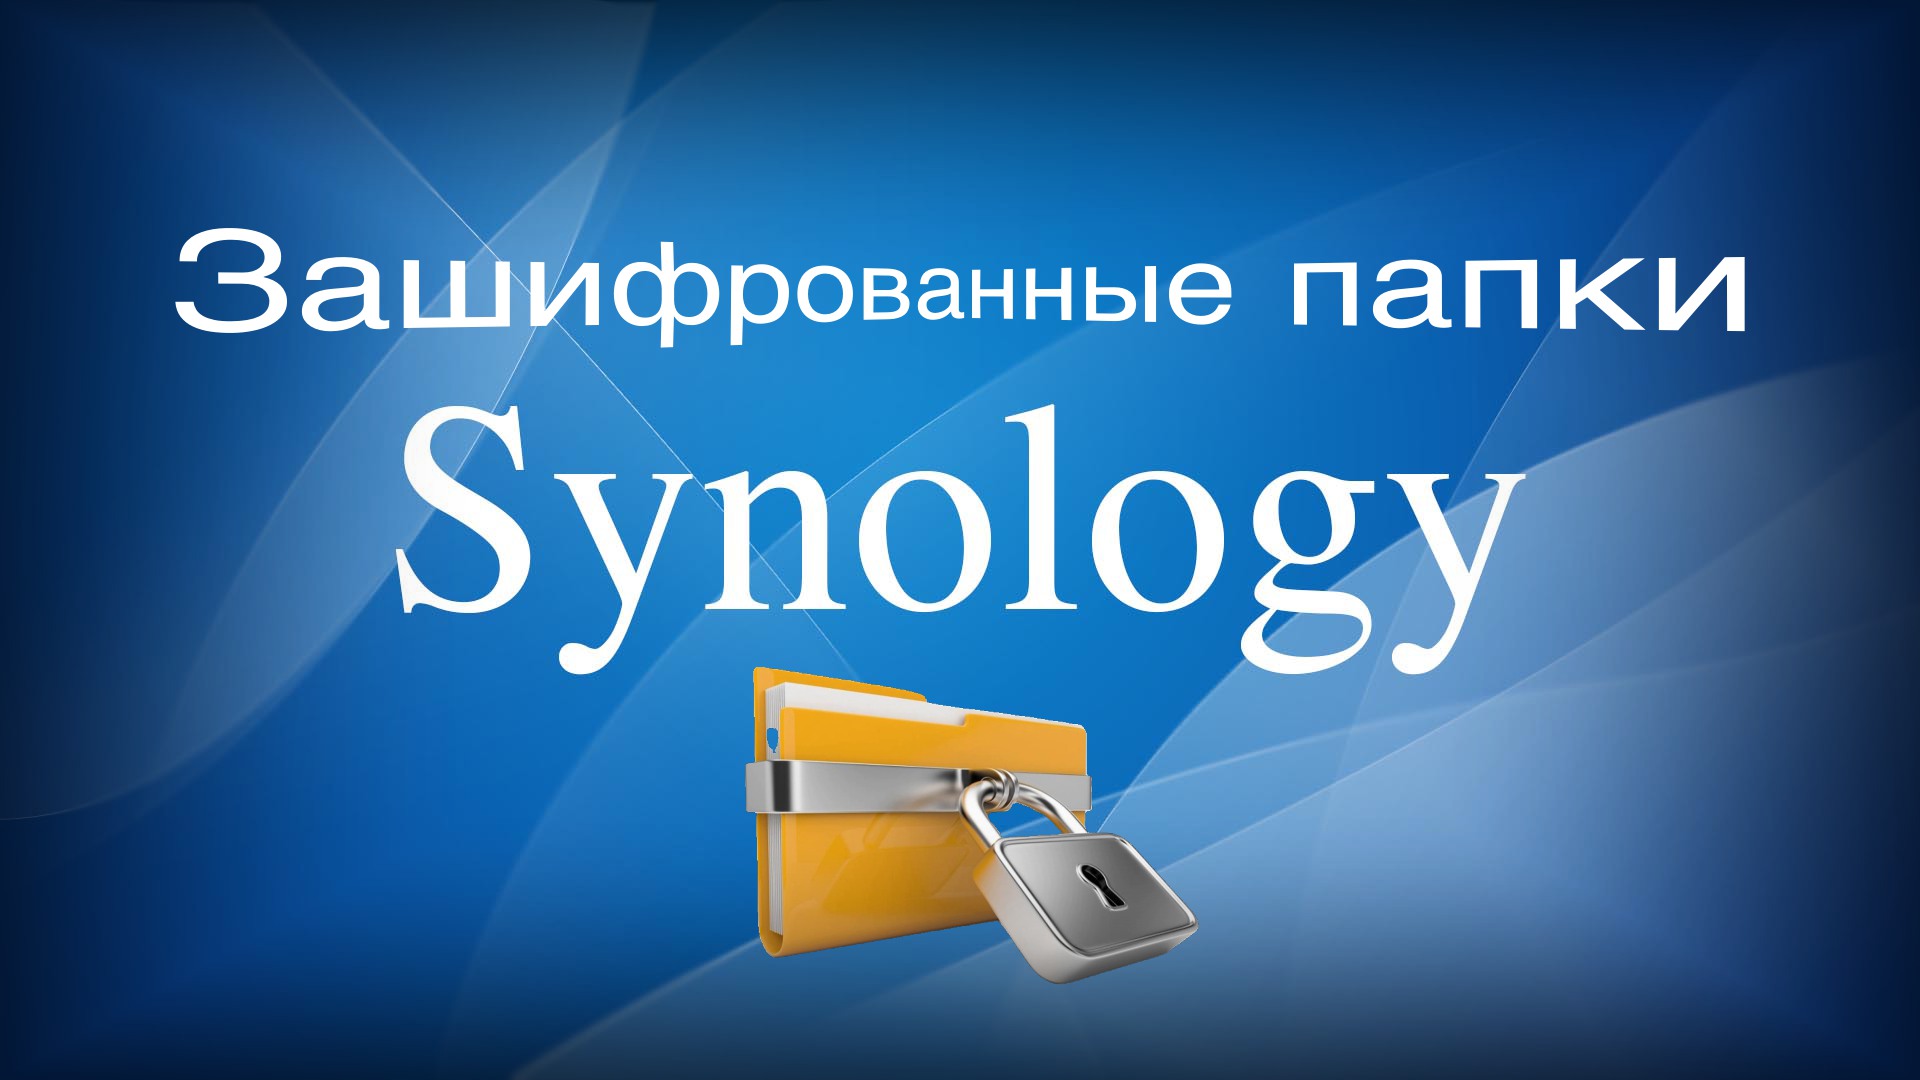 Synology зашифрованные папки